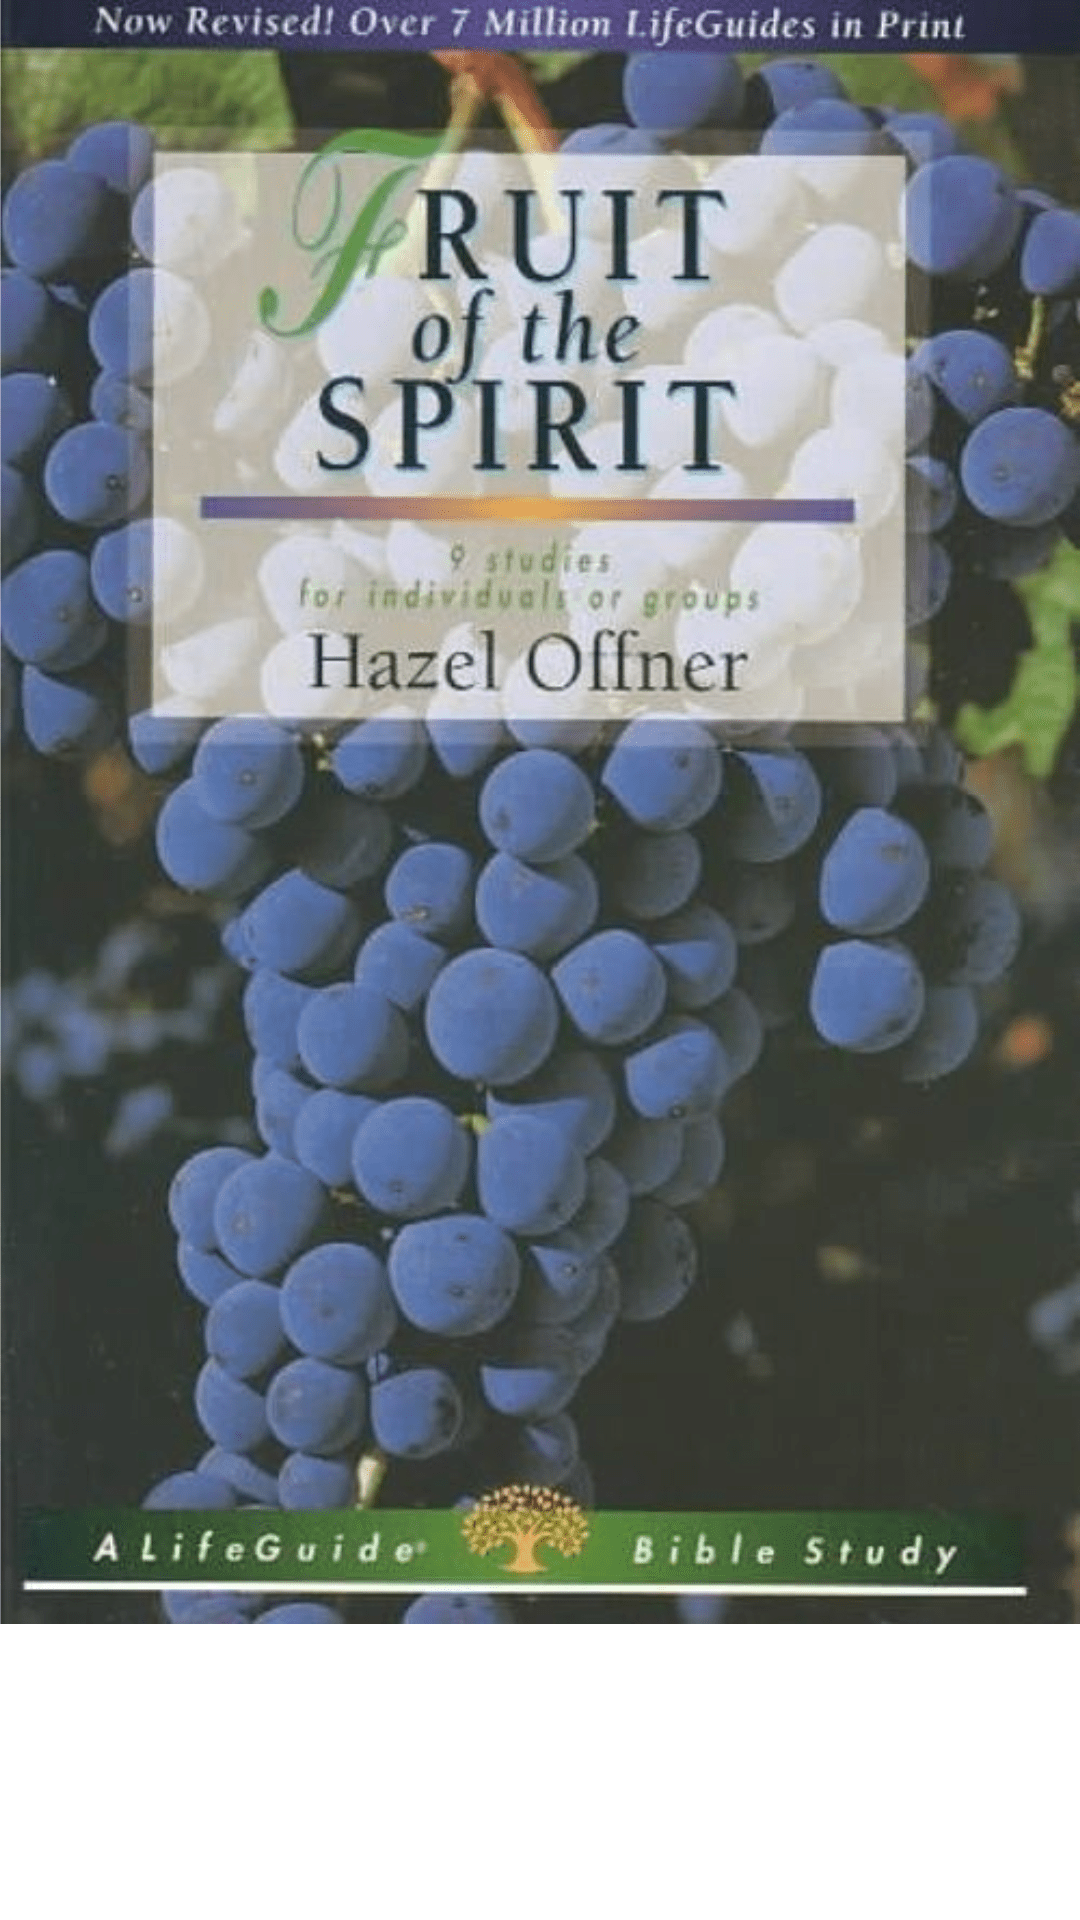 Fruit of the Spirit by Hazel Offner